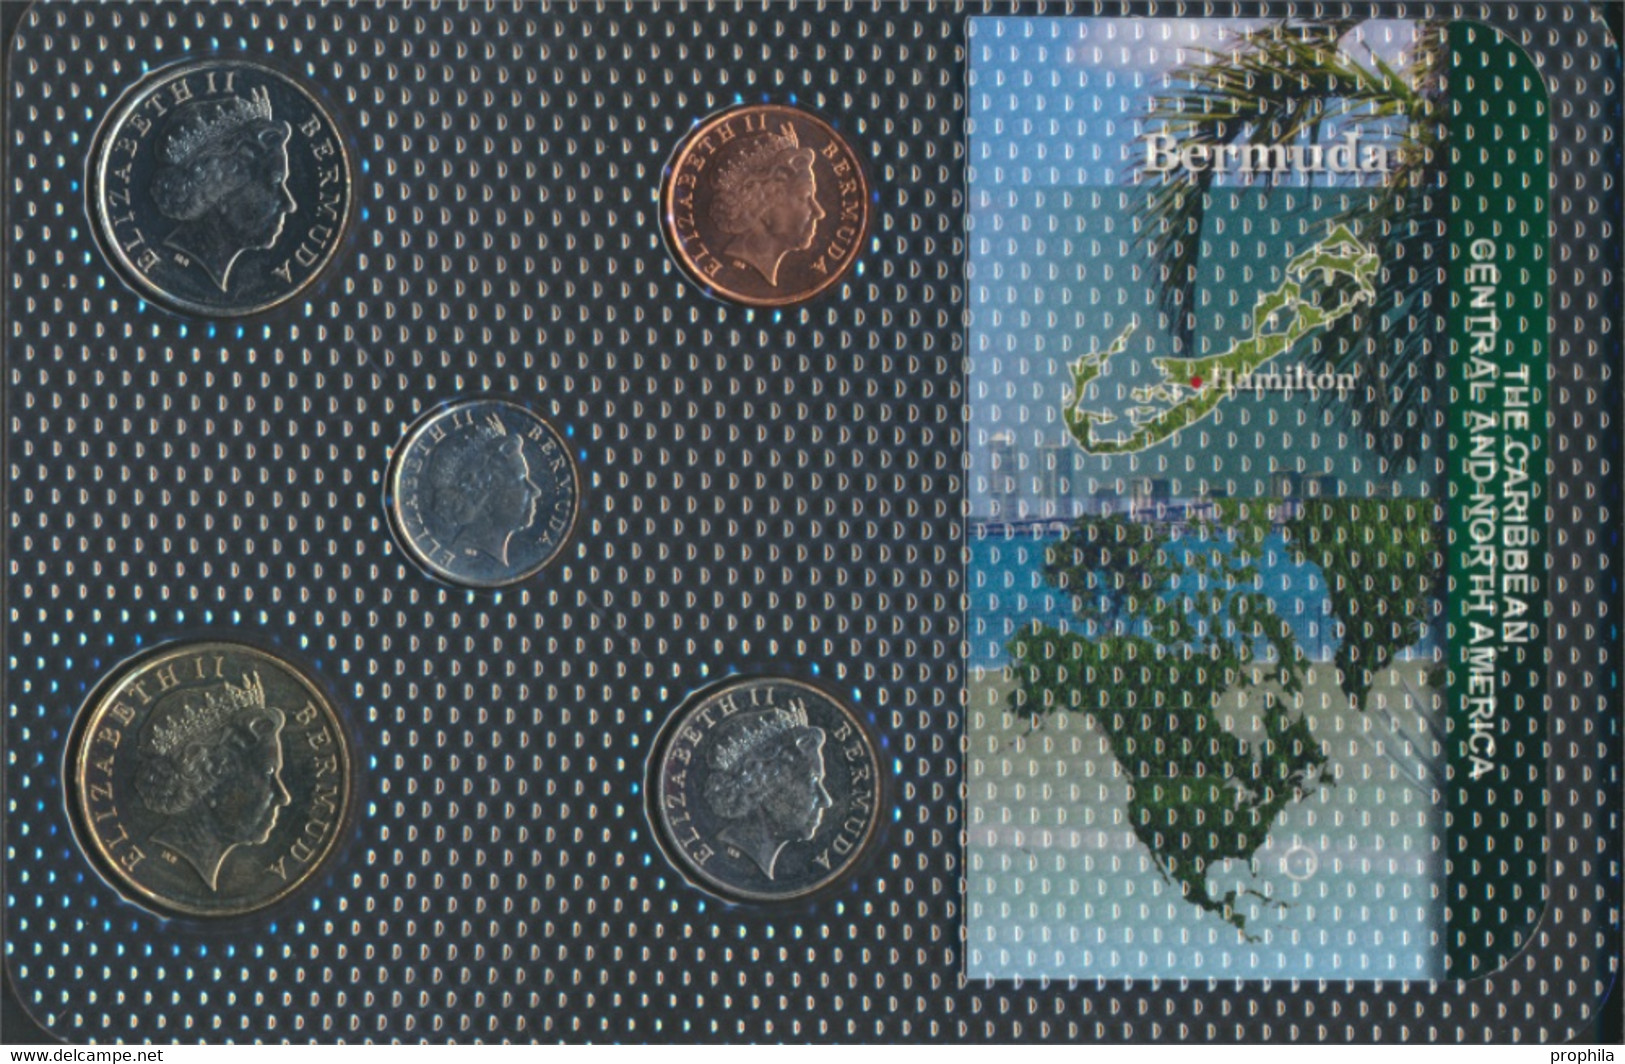 Bermuda-Inseln Stgl./unzirkuliert Kursmünzen Stgl./unzirkuliert Ab 1999 1 Cent Bis 1 Dollar (9648381 - Bermuda